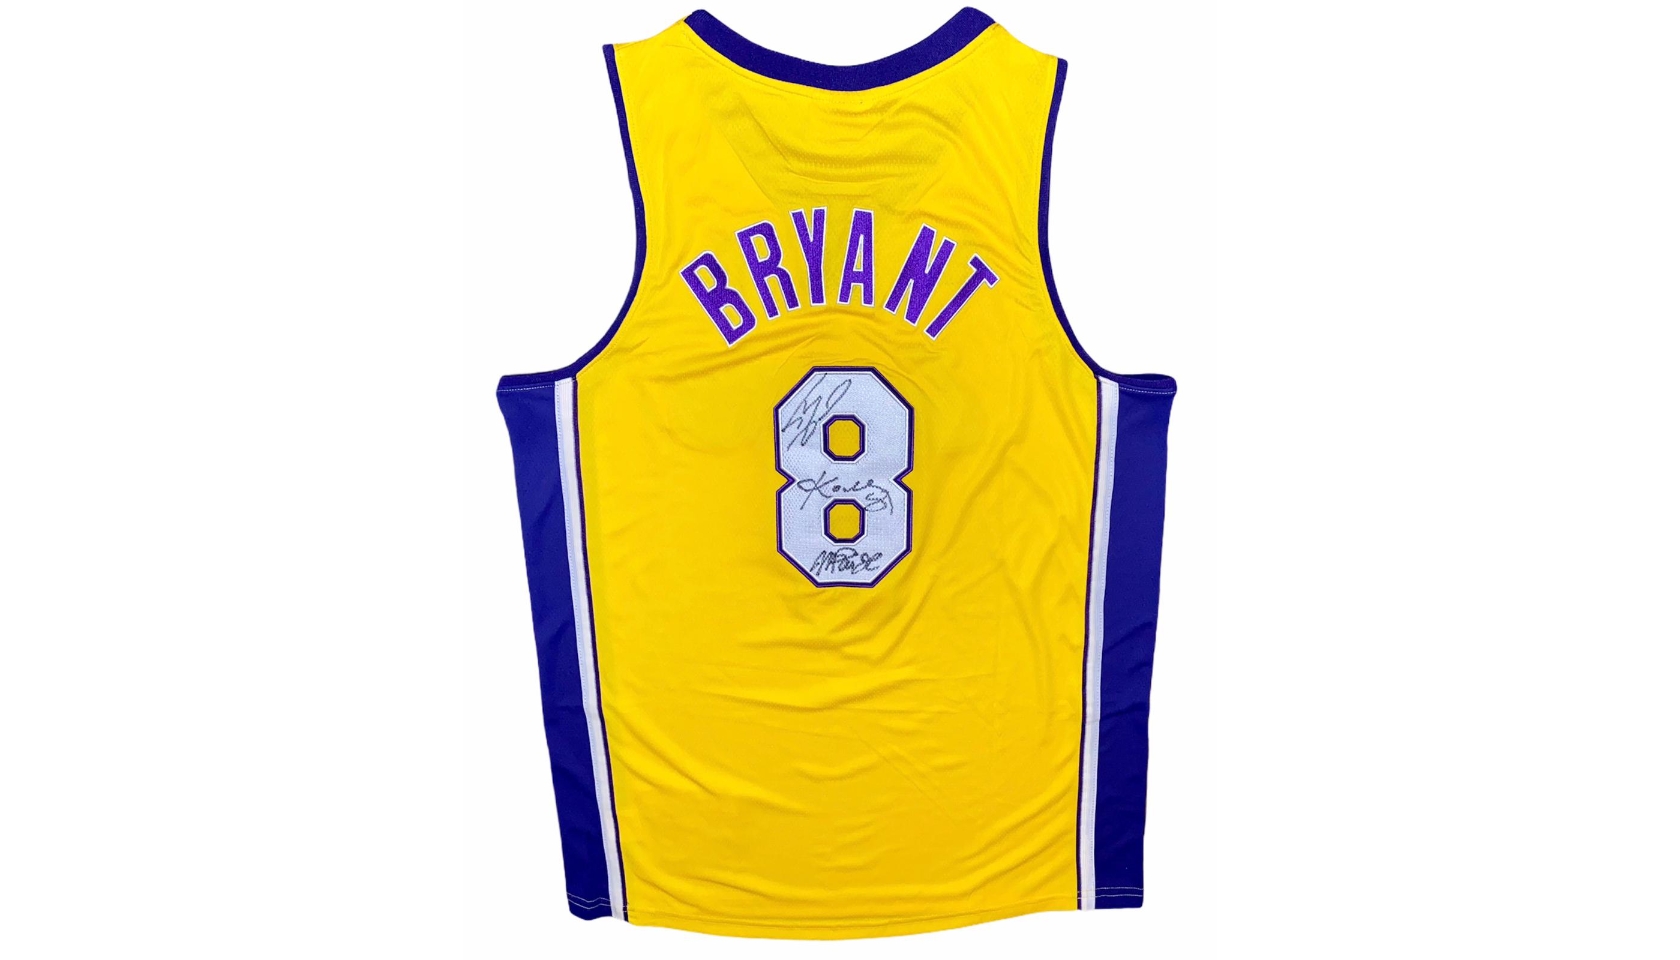 Kobe Bryant Signed Lakers #8 Jersey Authentic Finals Uda COA #D/208  Autograph - Inscriptagraphs Memorabilia - Inscriptagraphs Memorabilia